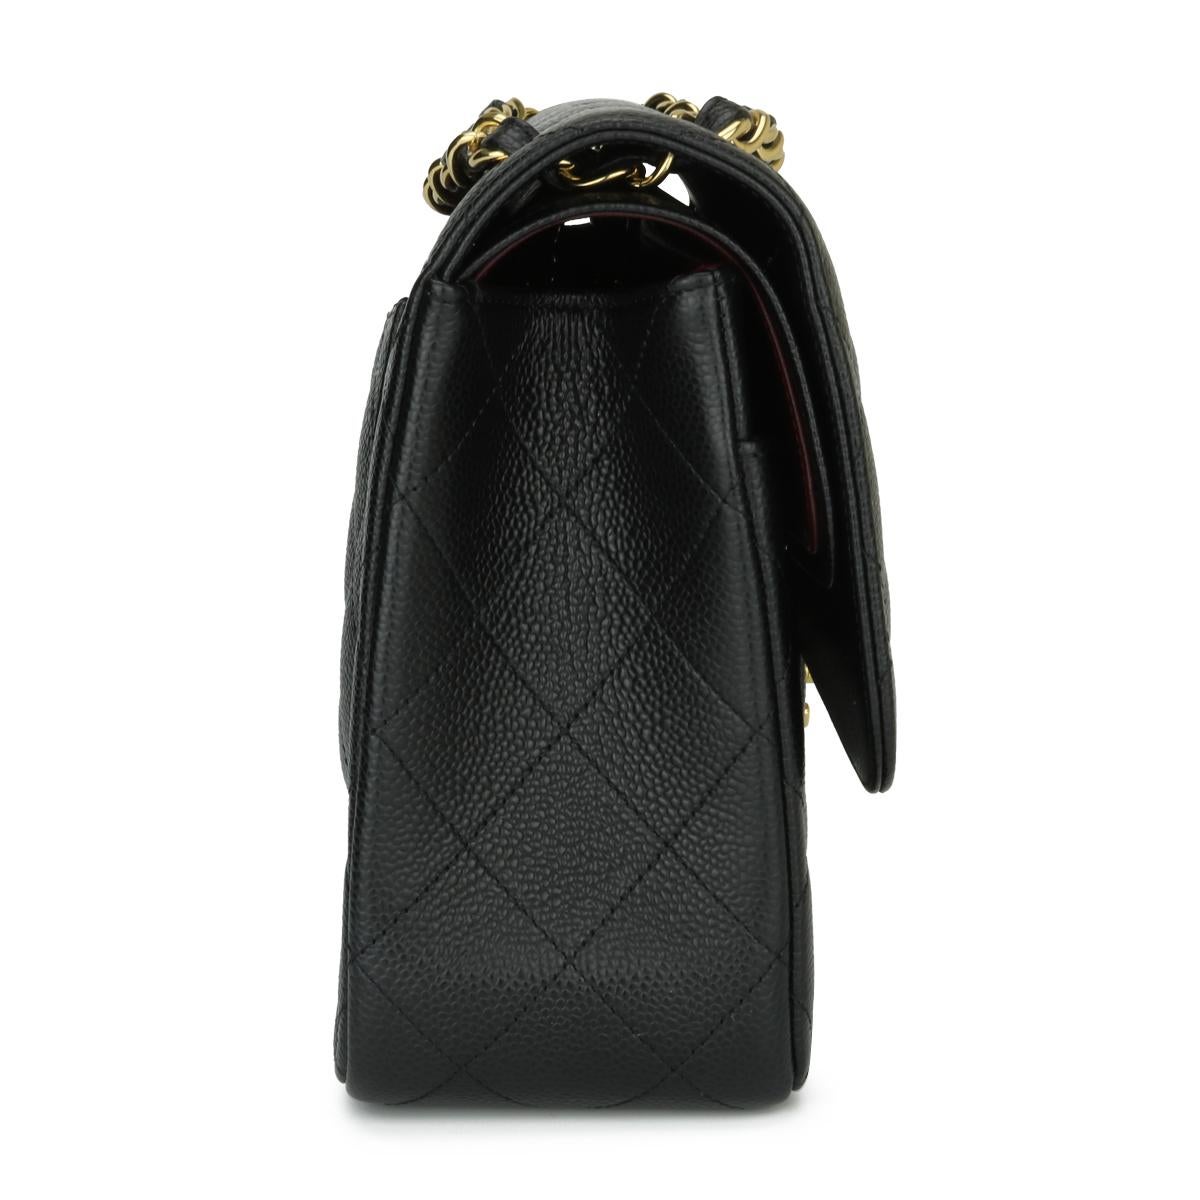 CHANEL Double Flap Jumbo Bag Black Caviar with Gold Hardware 2016 2